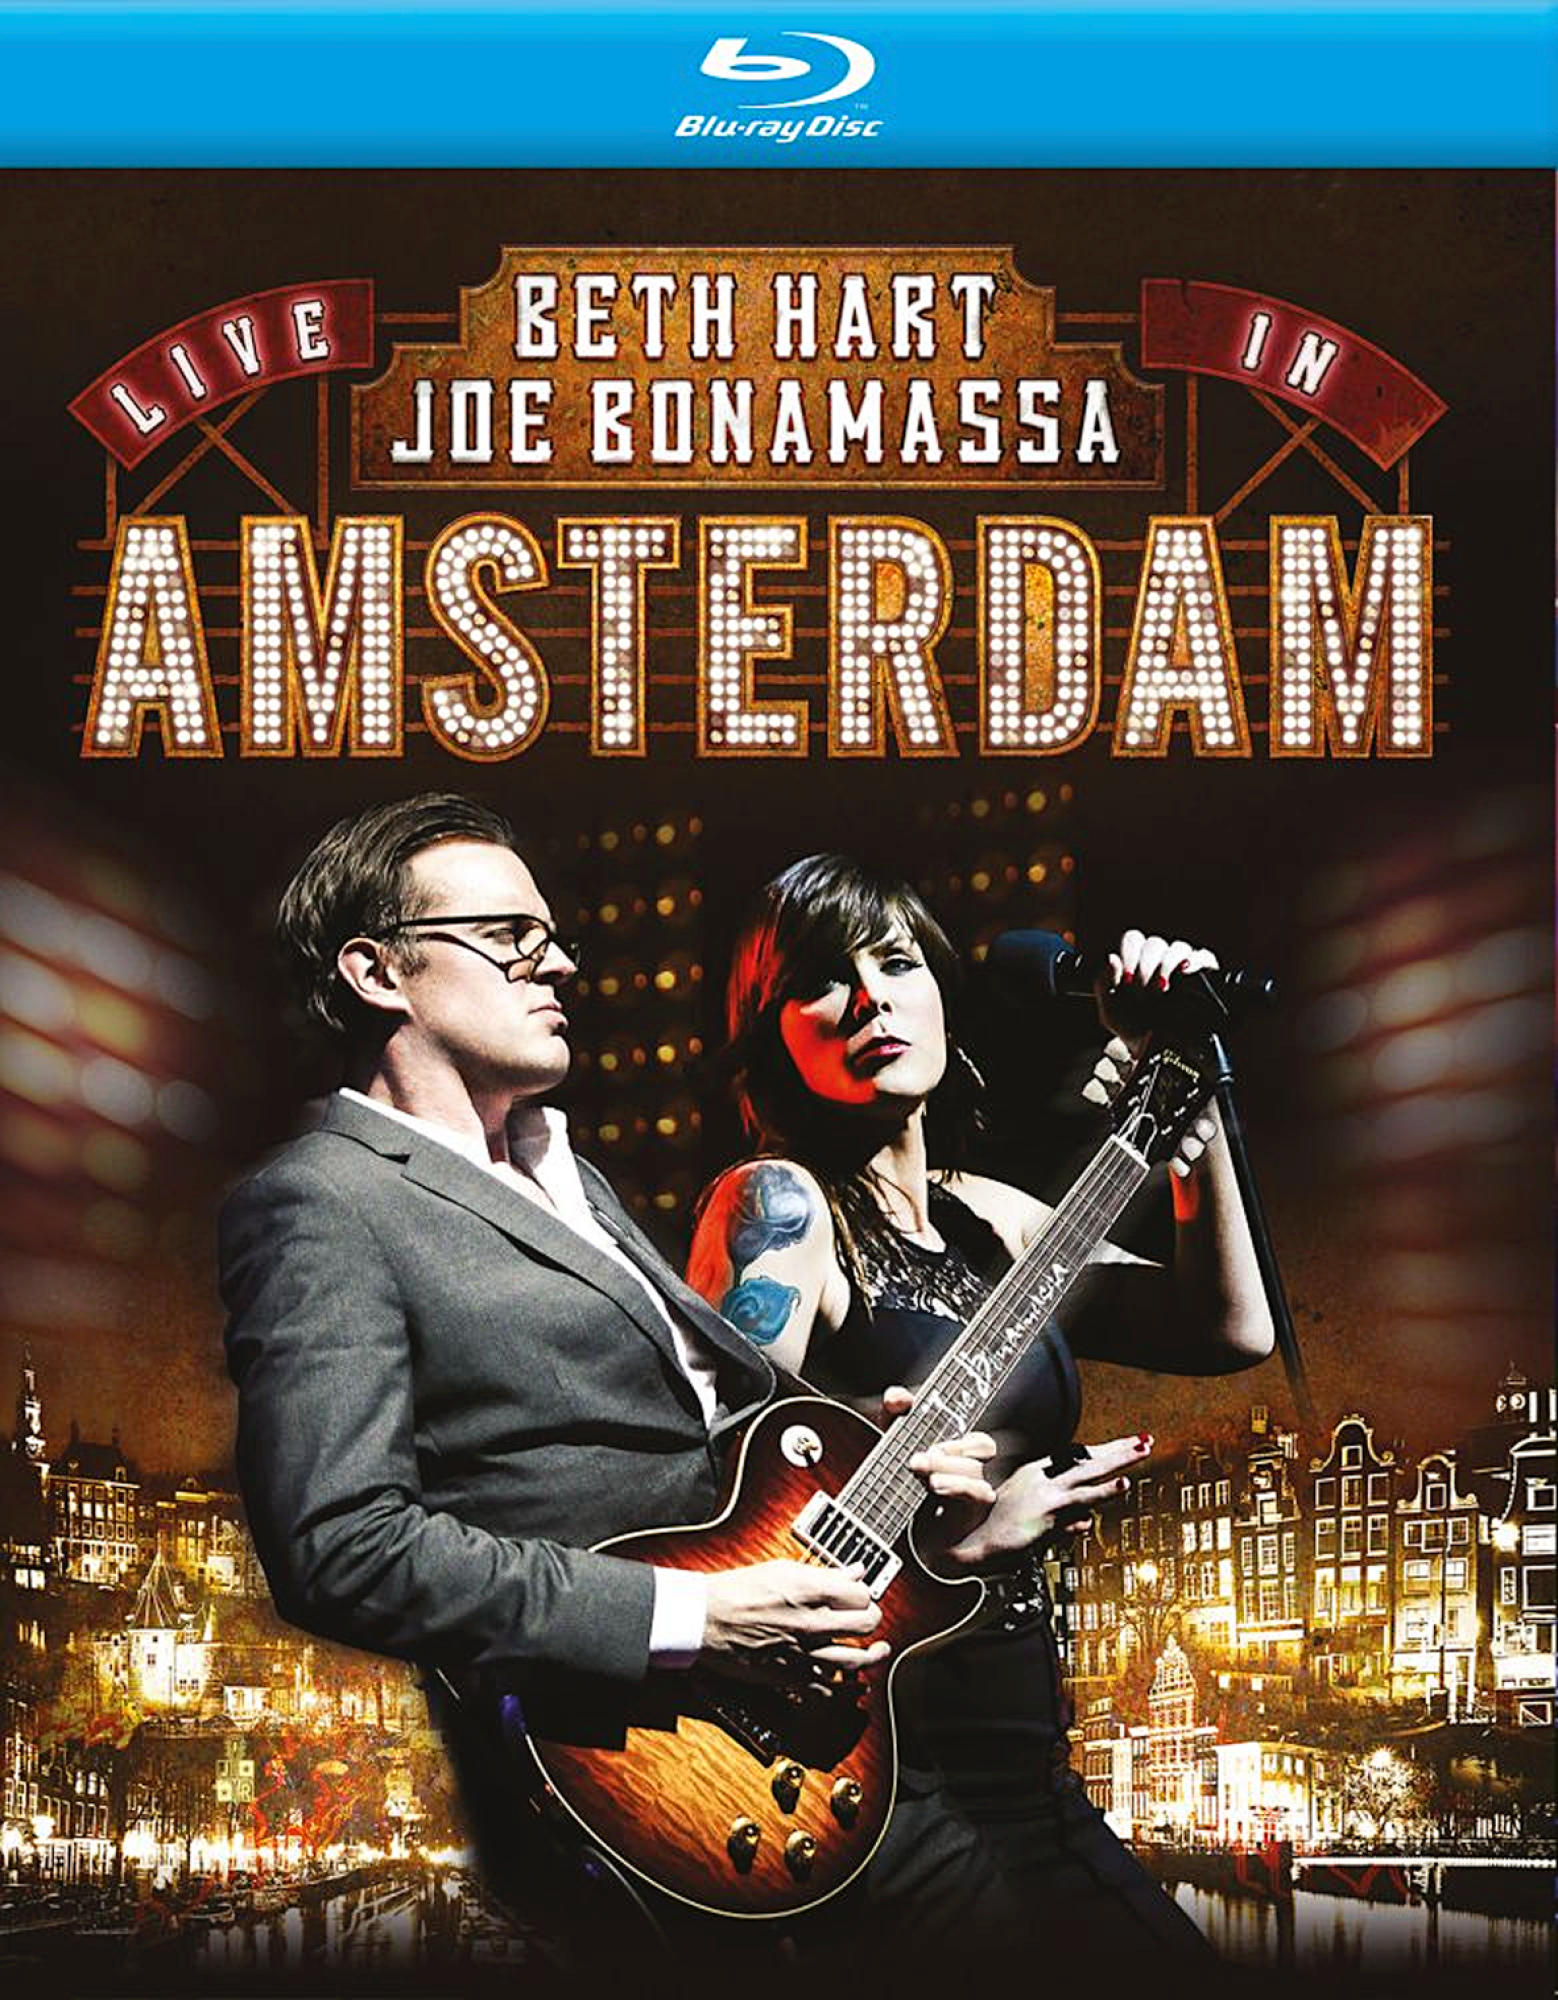 Beth Hart, Bonamassa - (Blu-ray) Joe In Amsterdam - Live